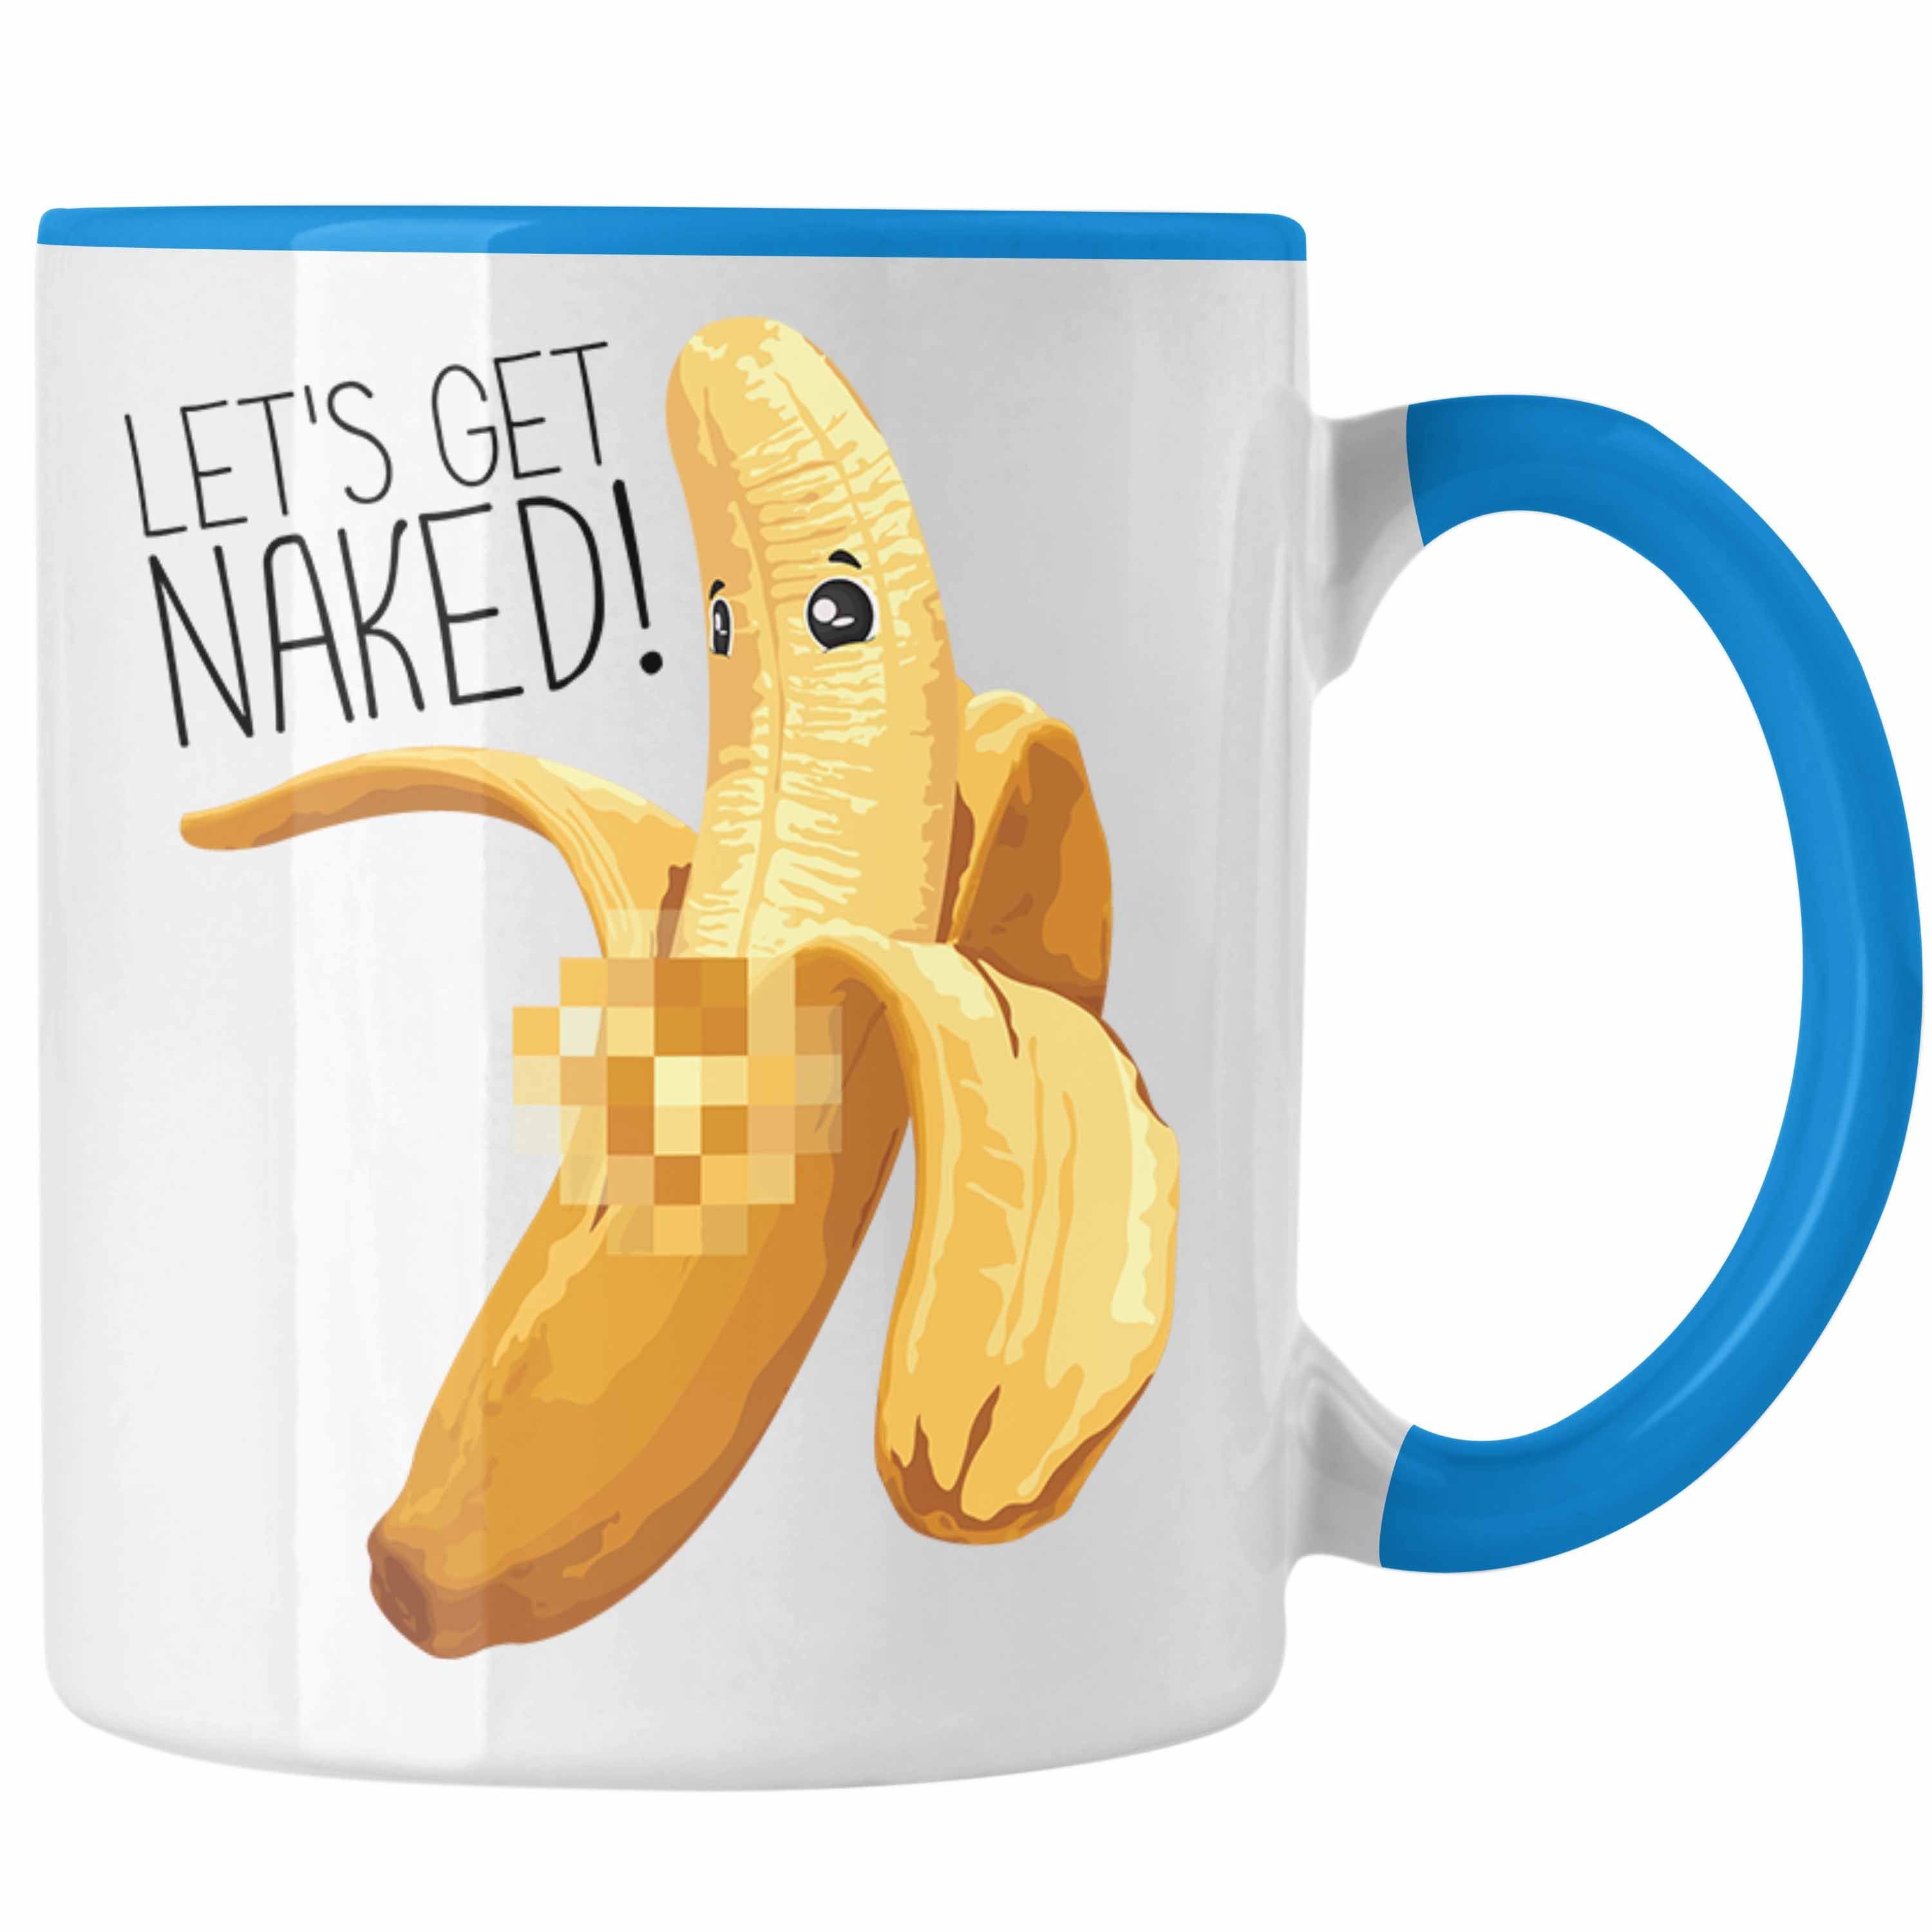 Trendation Tasse Banane Lets Get Naked Tasse Geschenk Striptease Erwachsener Humor Bech Blau